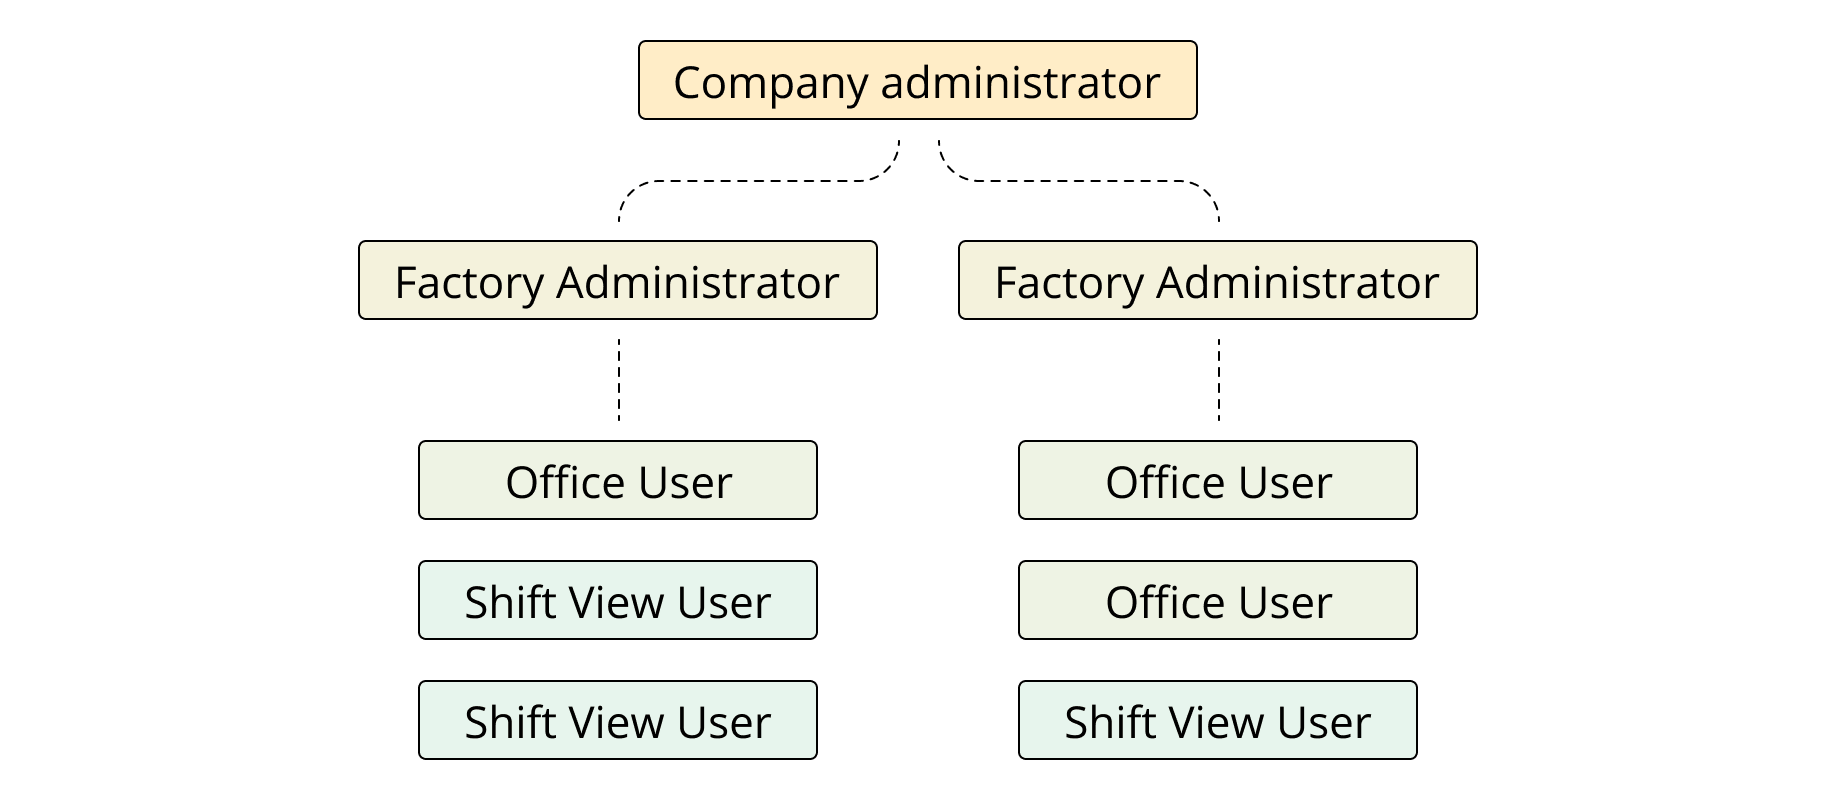 Evocon user roles for multiple factories